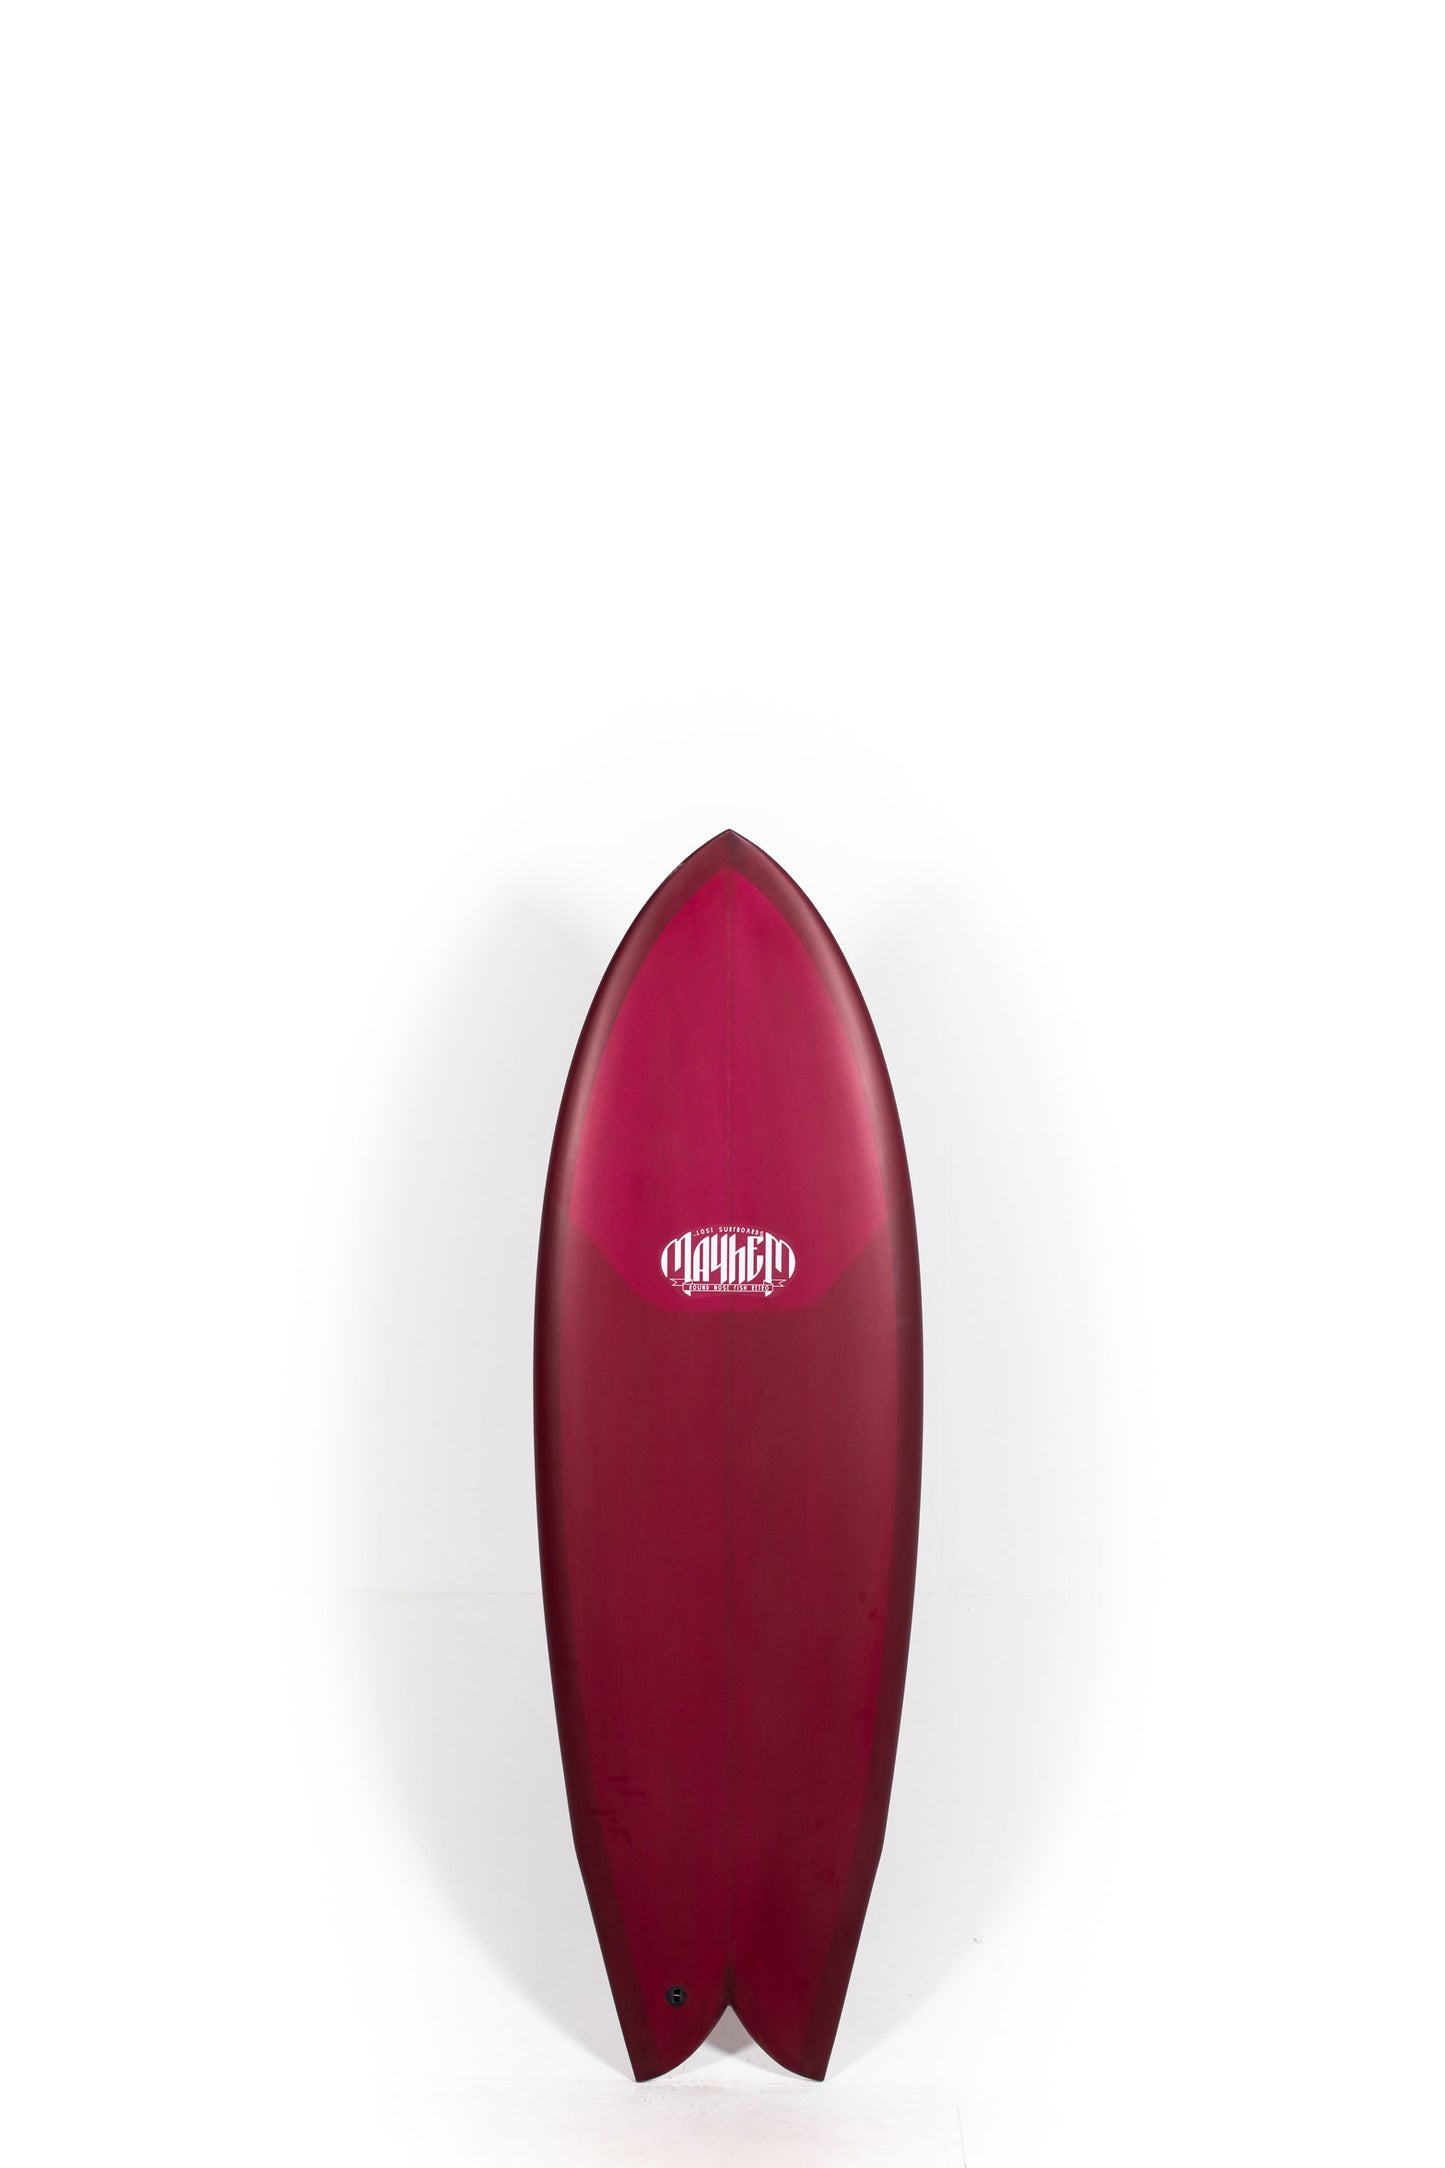 Pukas Surf Shop - Lost Surfboard - RNF RETRO'23 REVAMP by Mayhem - 5’6” x 20.75" x 2.40" - 32L - MH17229